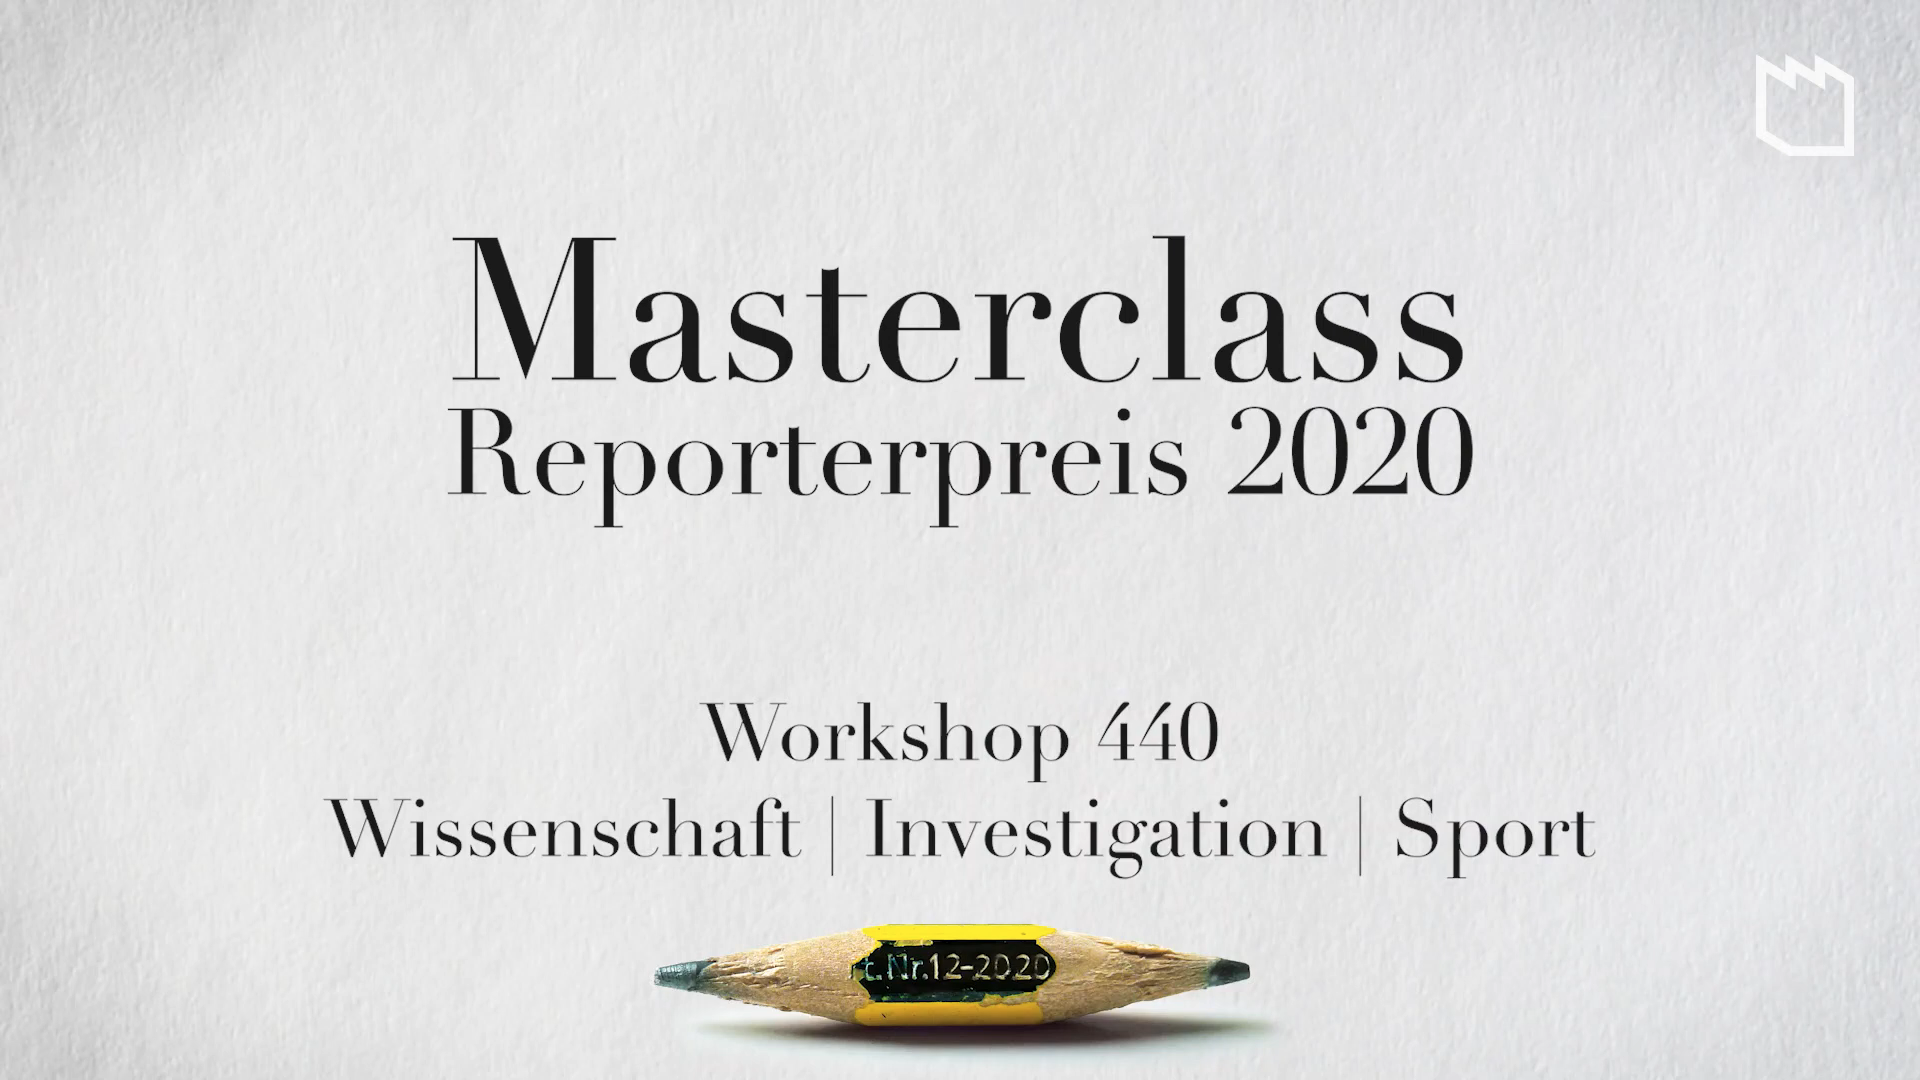 Masterclass Reporterpreis: Wissenschaft | Investigation | Sport Workshop 440